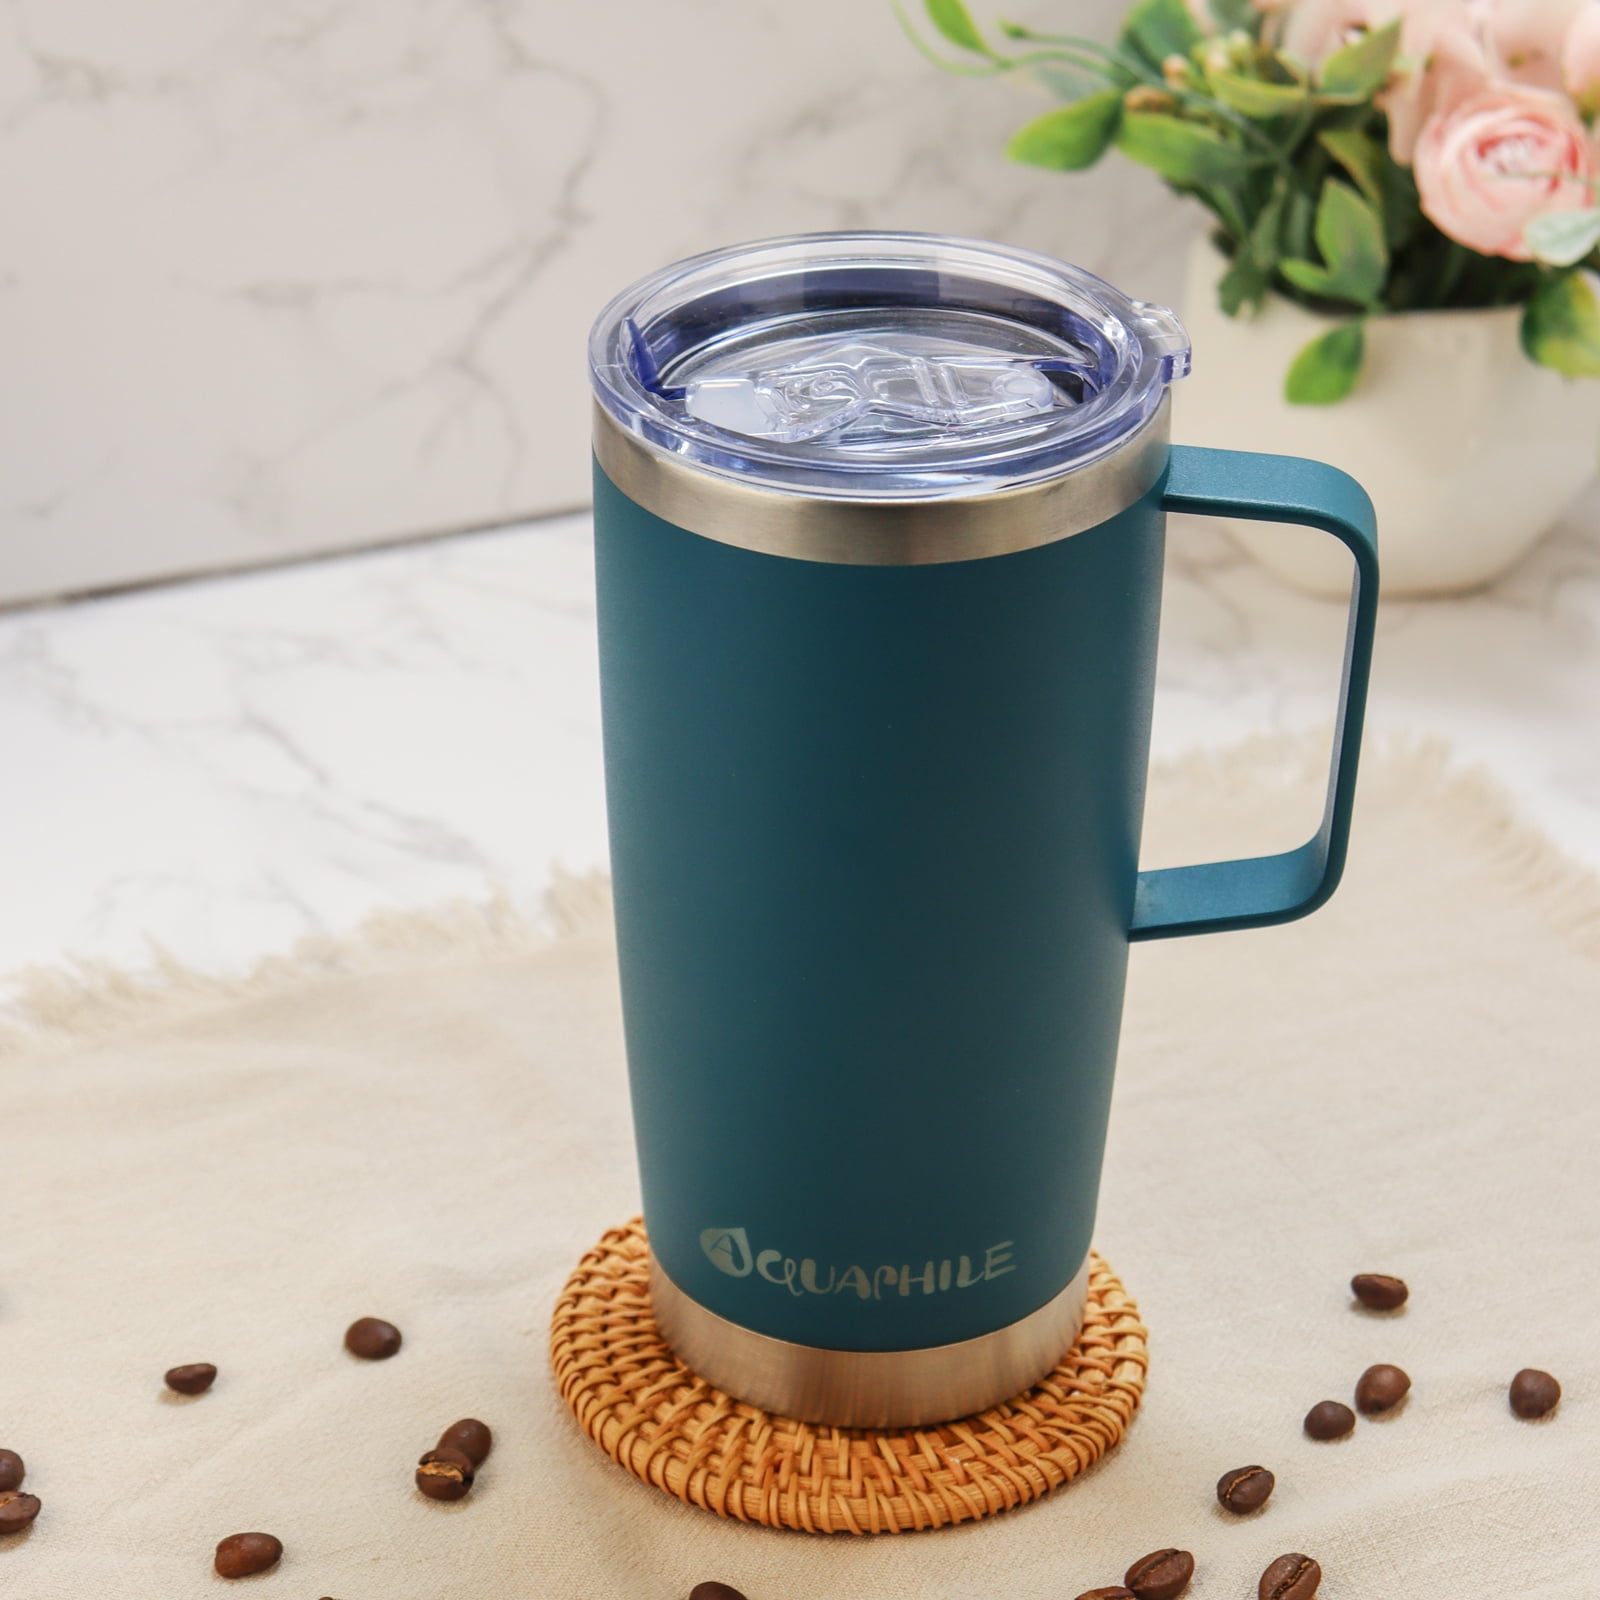 AQUAPHILE Reusable Coffee Cup, Coffee Travel Mug with Leak-proof